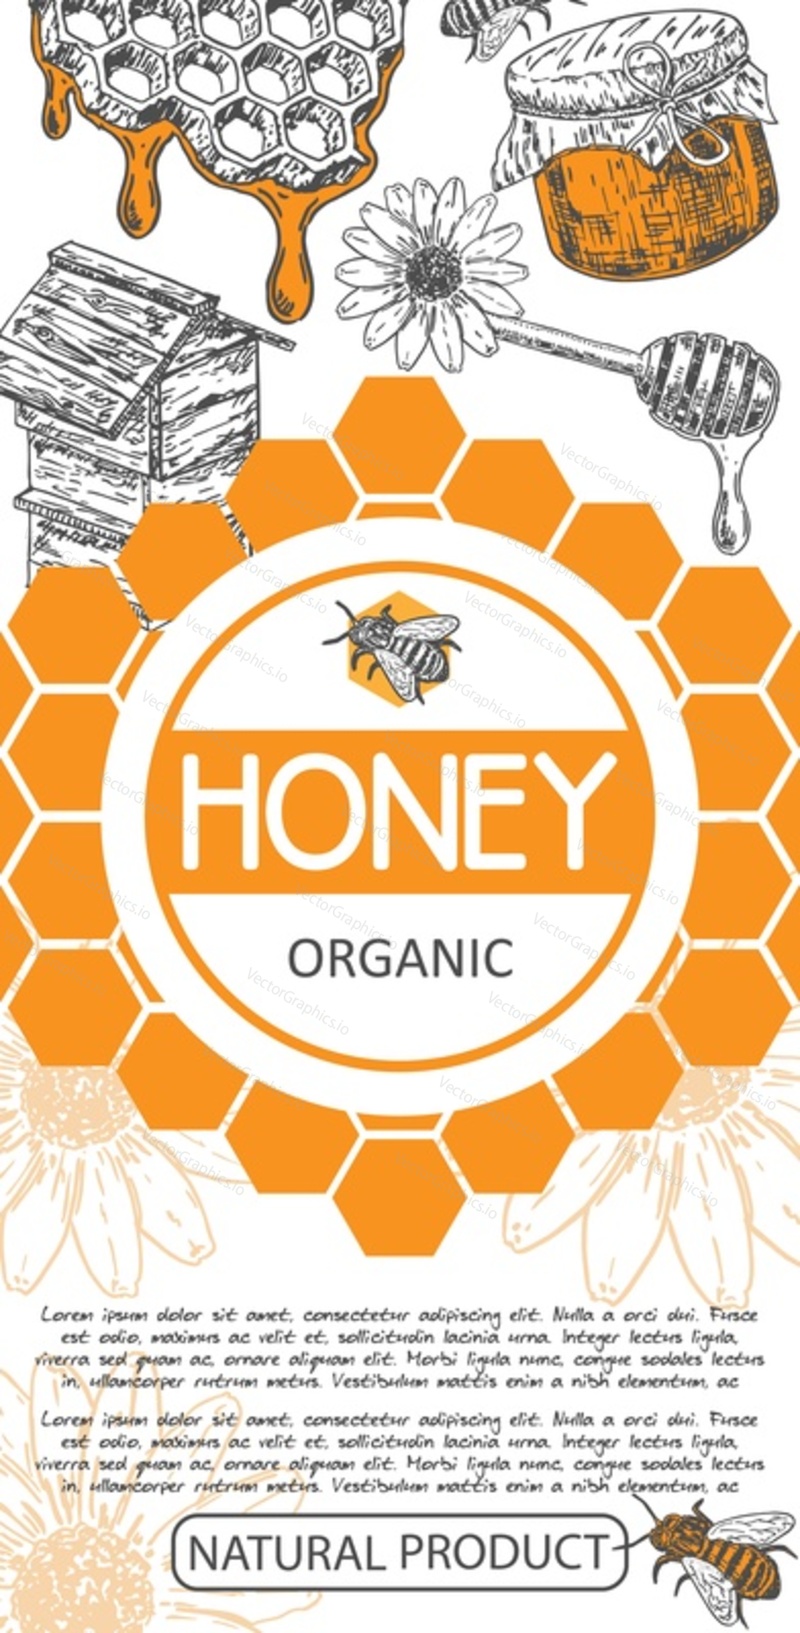 Organic honey vector. Bee food jar label design illustration. Beehive product vintage graphic logo. Natural flower syrup from honeybee. Beekeeping branding and advertisement